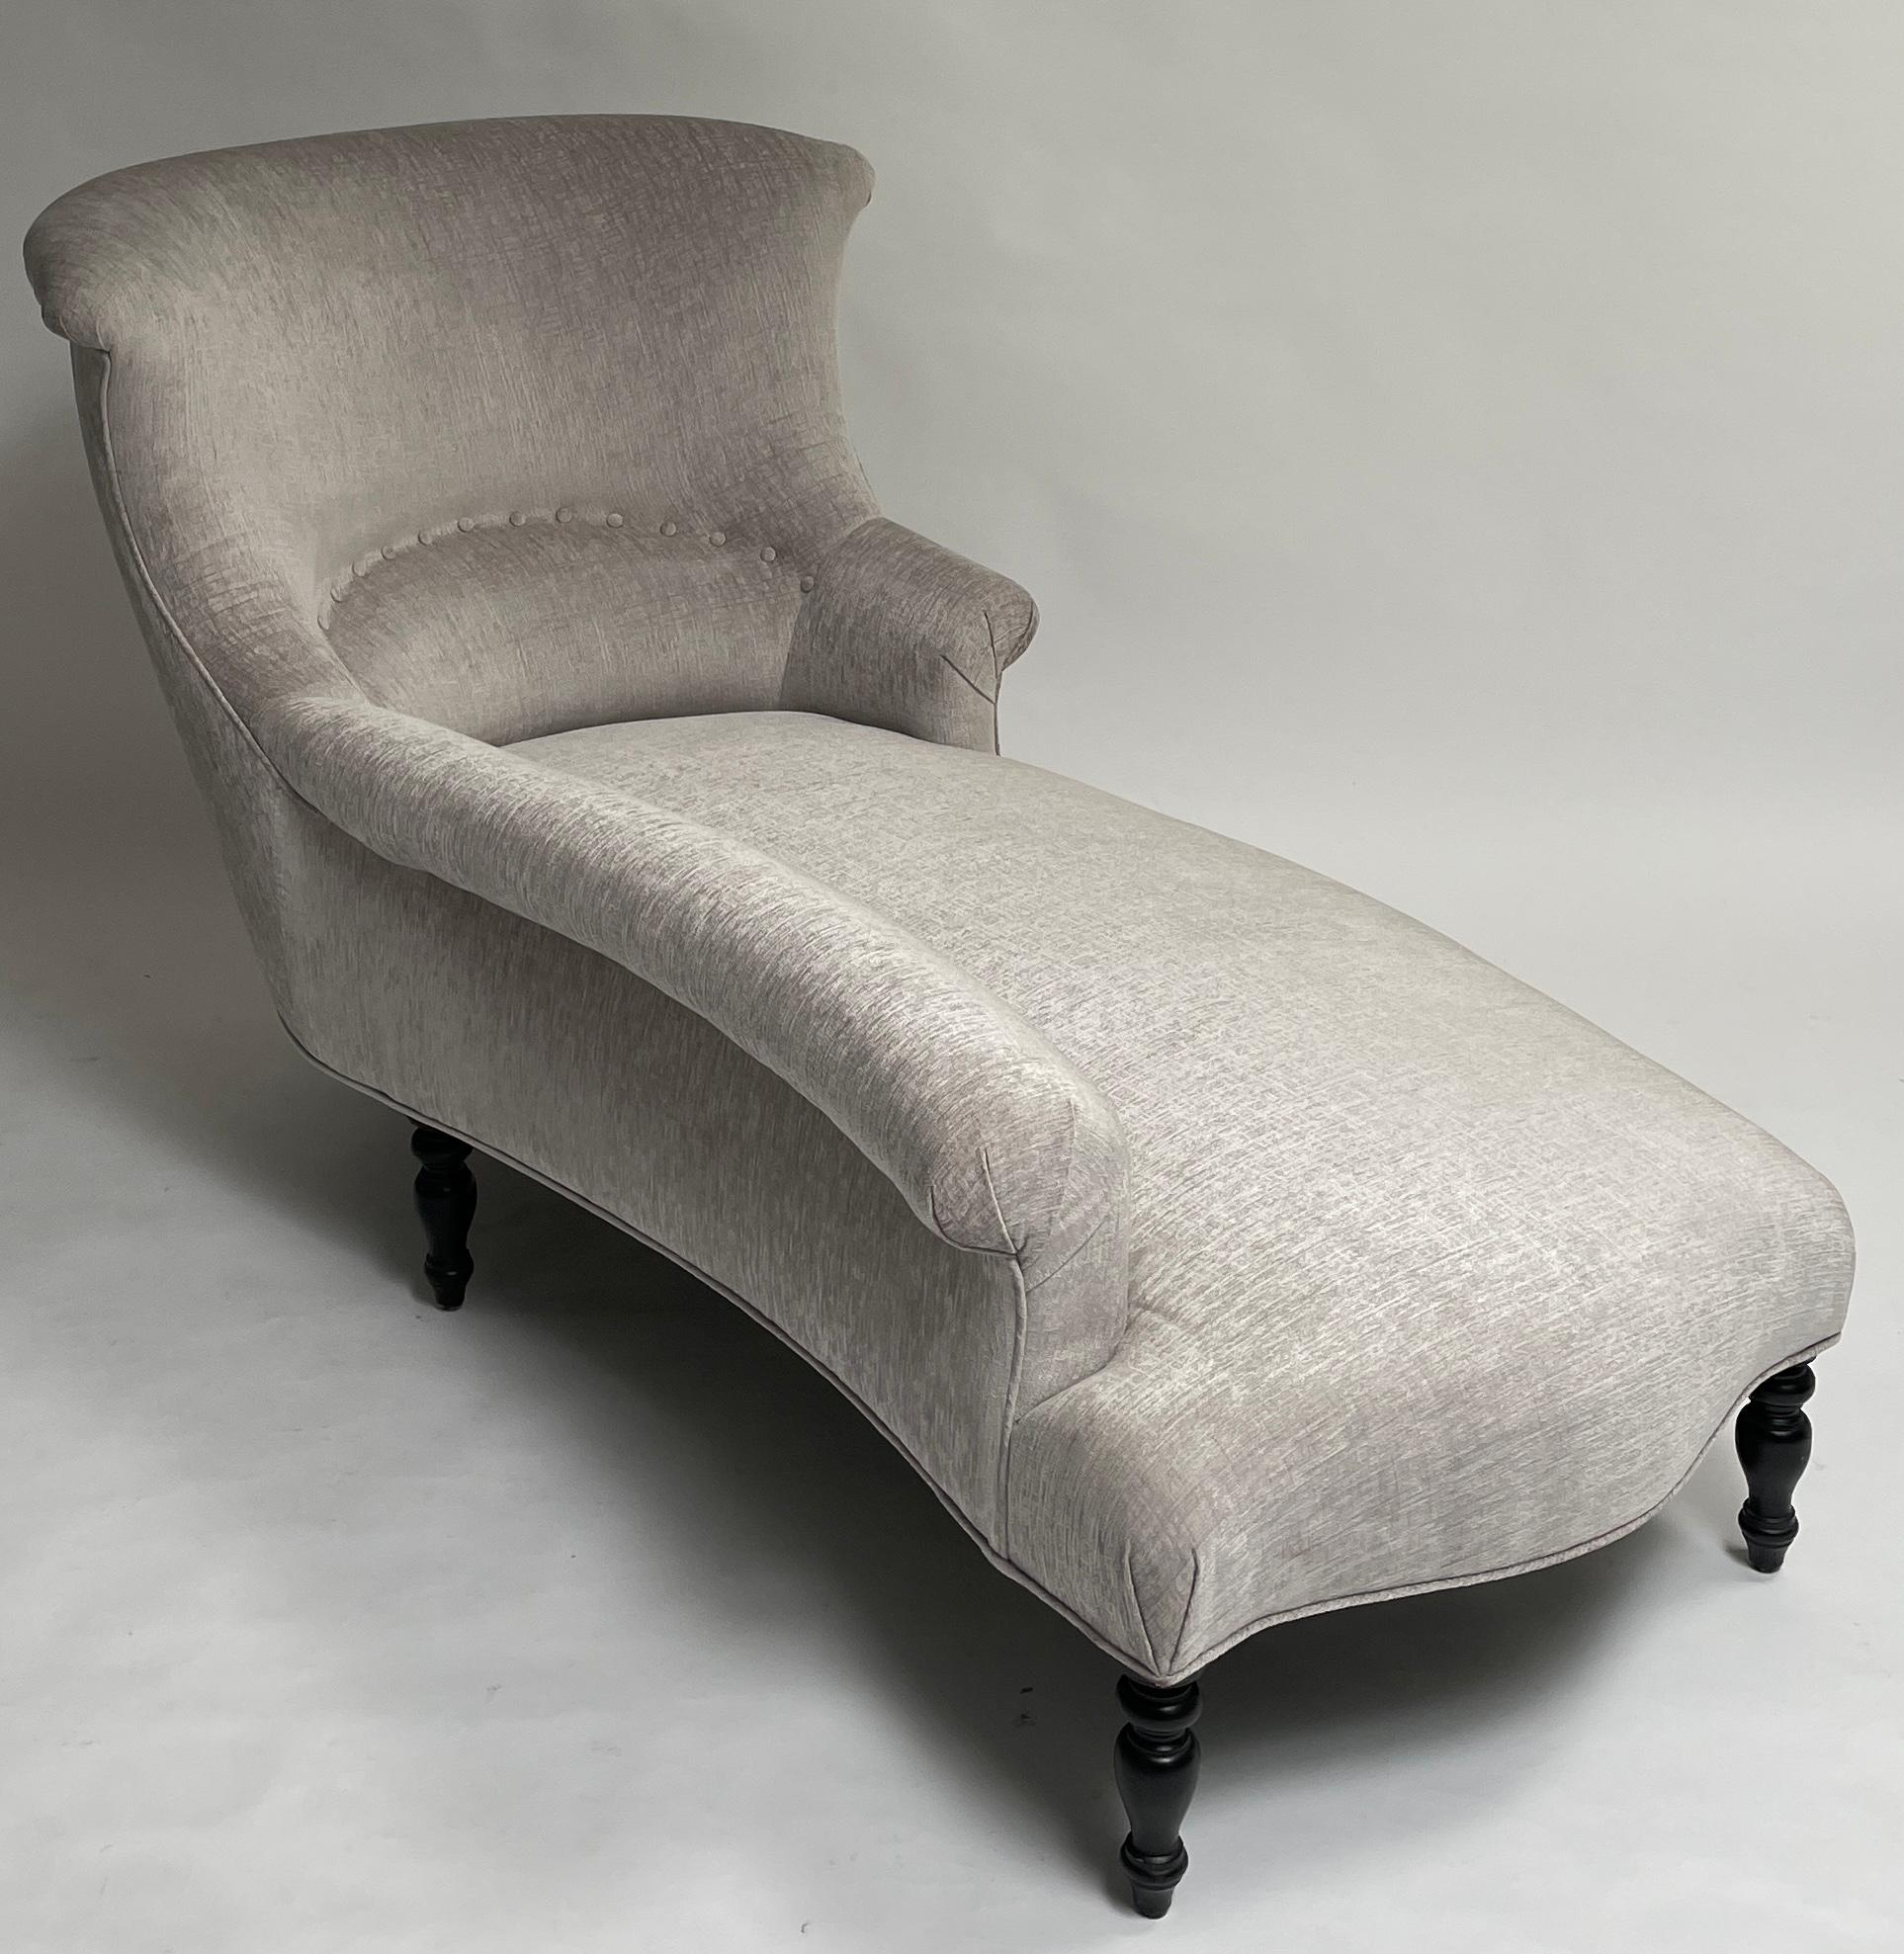 Garronne Chaise Lounge by Bourgeois Boheme Atelier, Silver For Sale 6